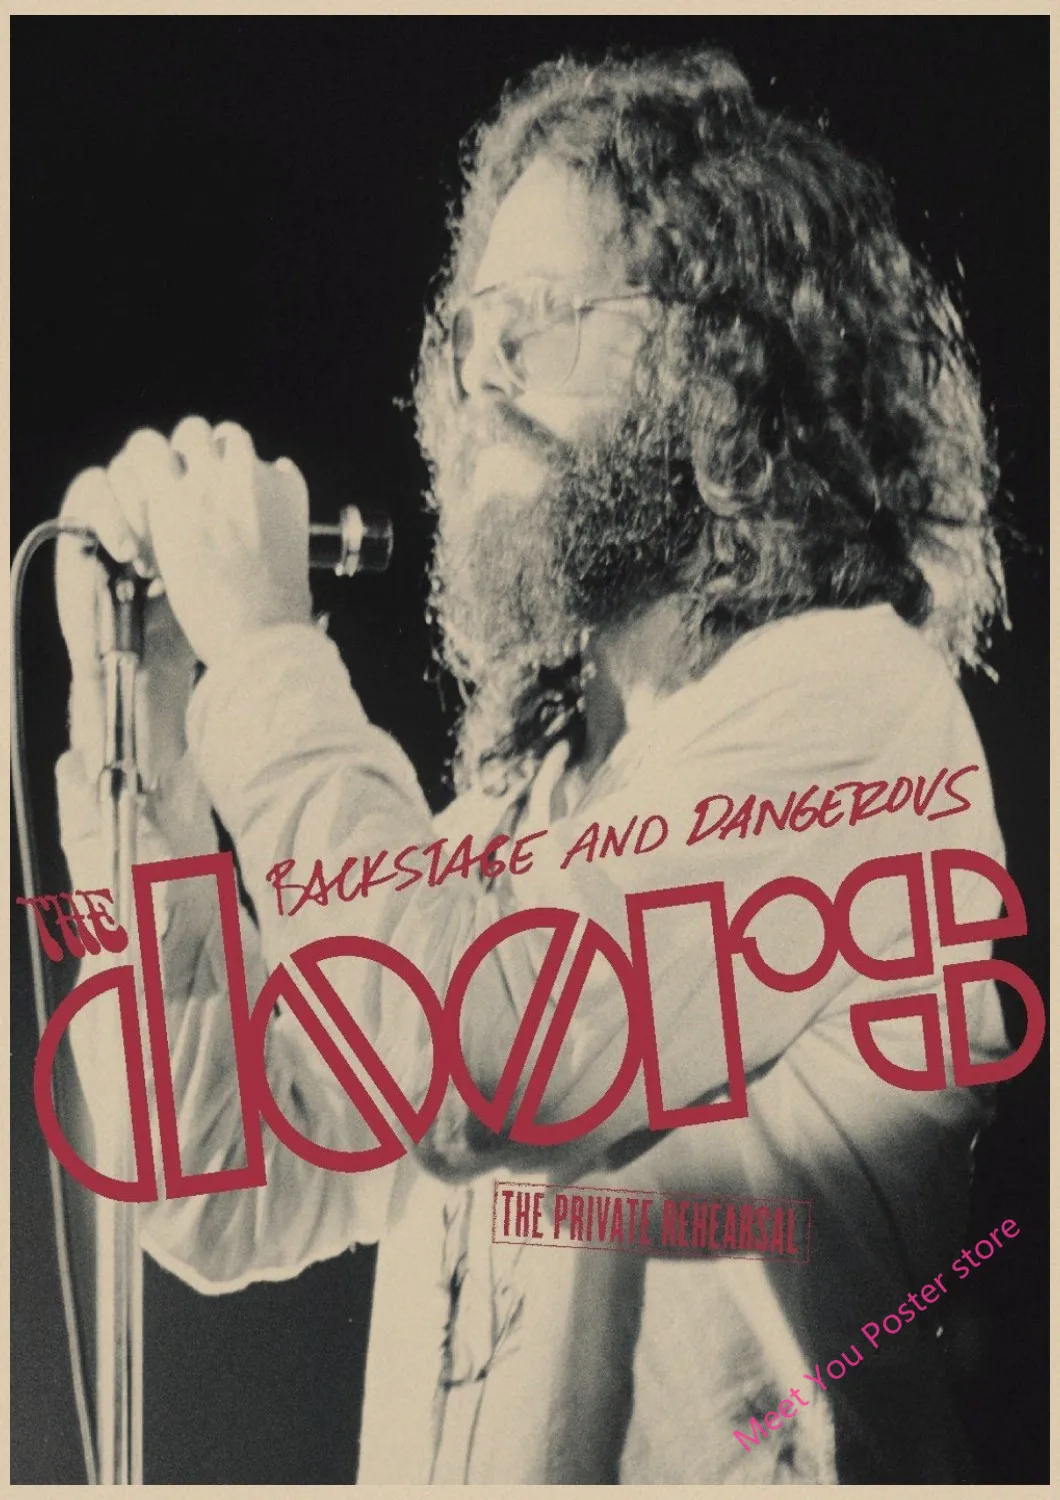 The Doors Jim Morrison Винтаж Ретро Рок-Группа Музыка Гитара матовая крафт-бумага плакат Настенная Наклейка домашний декор A1